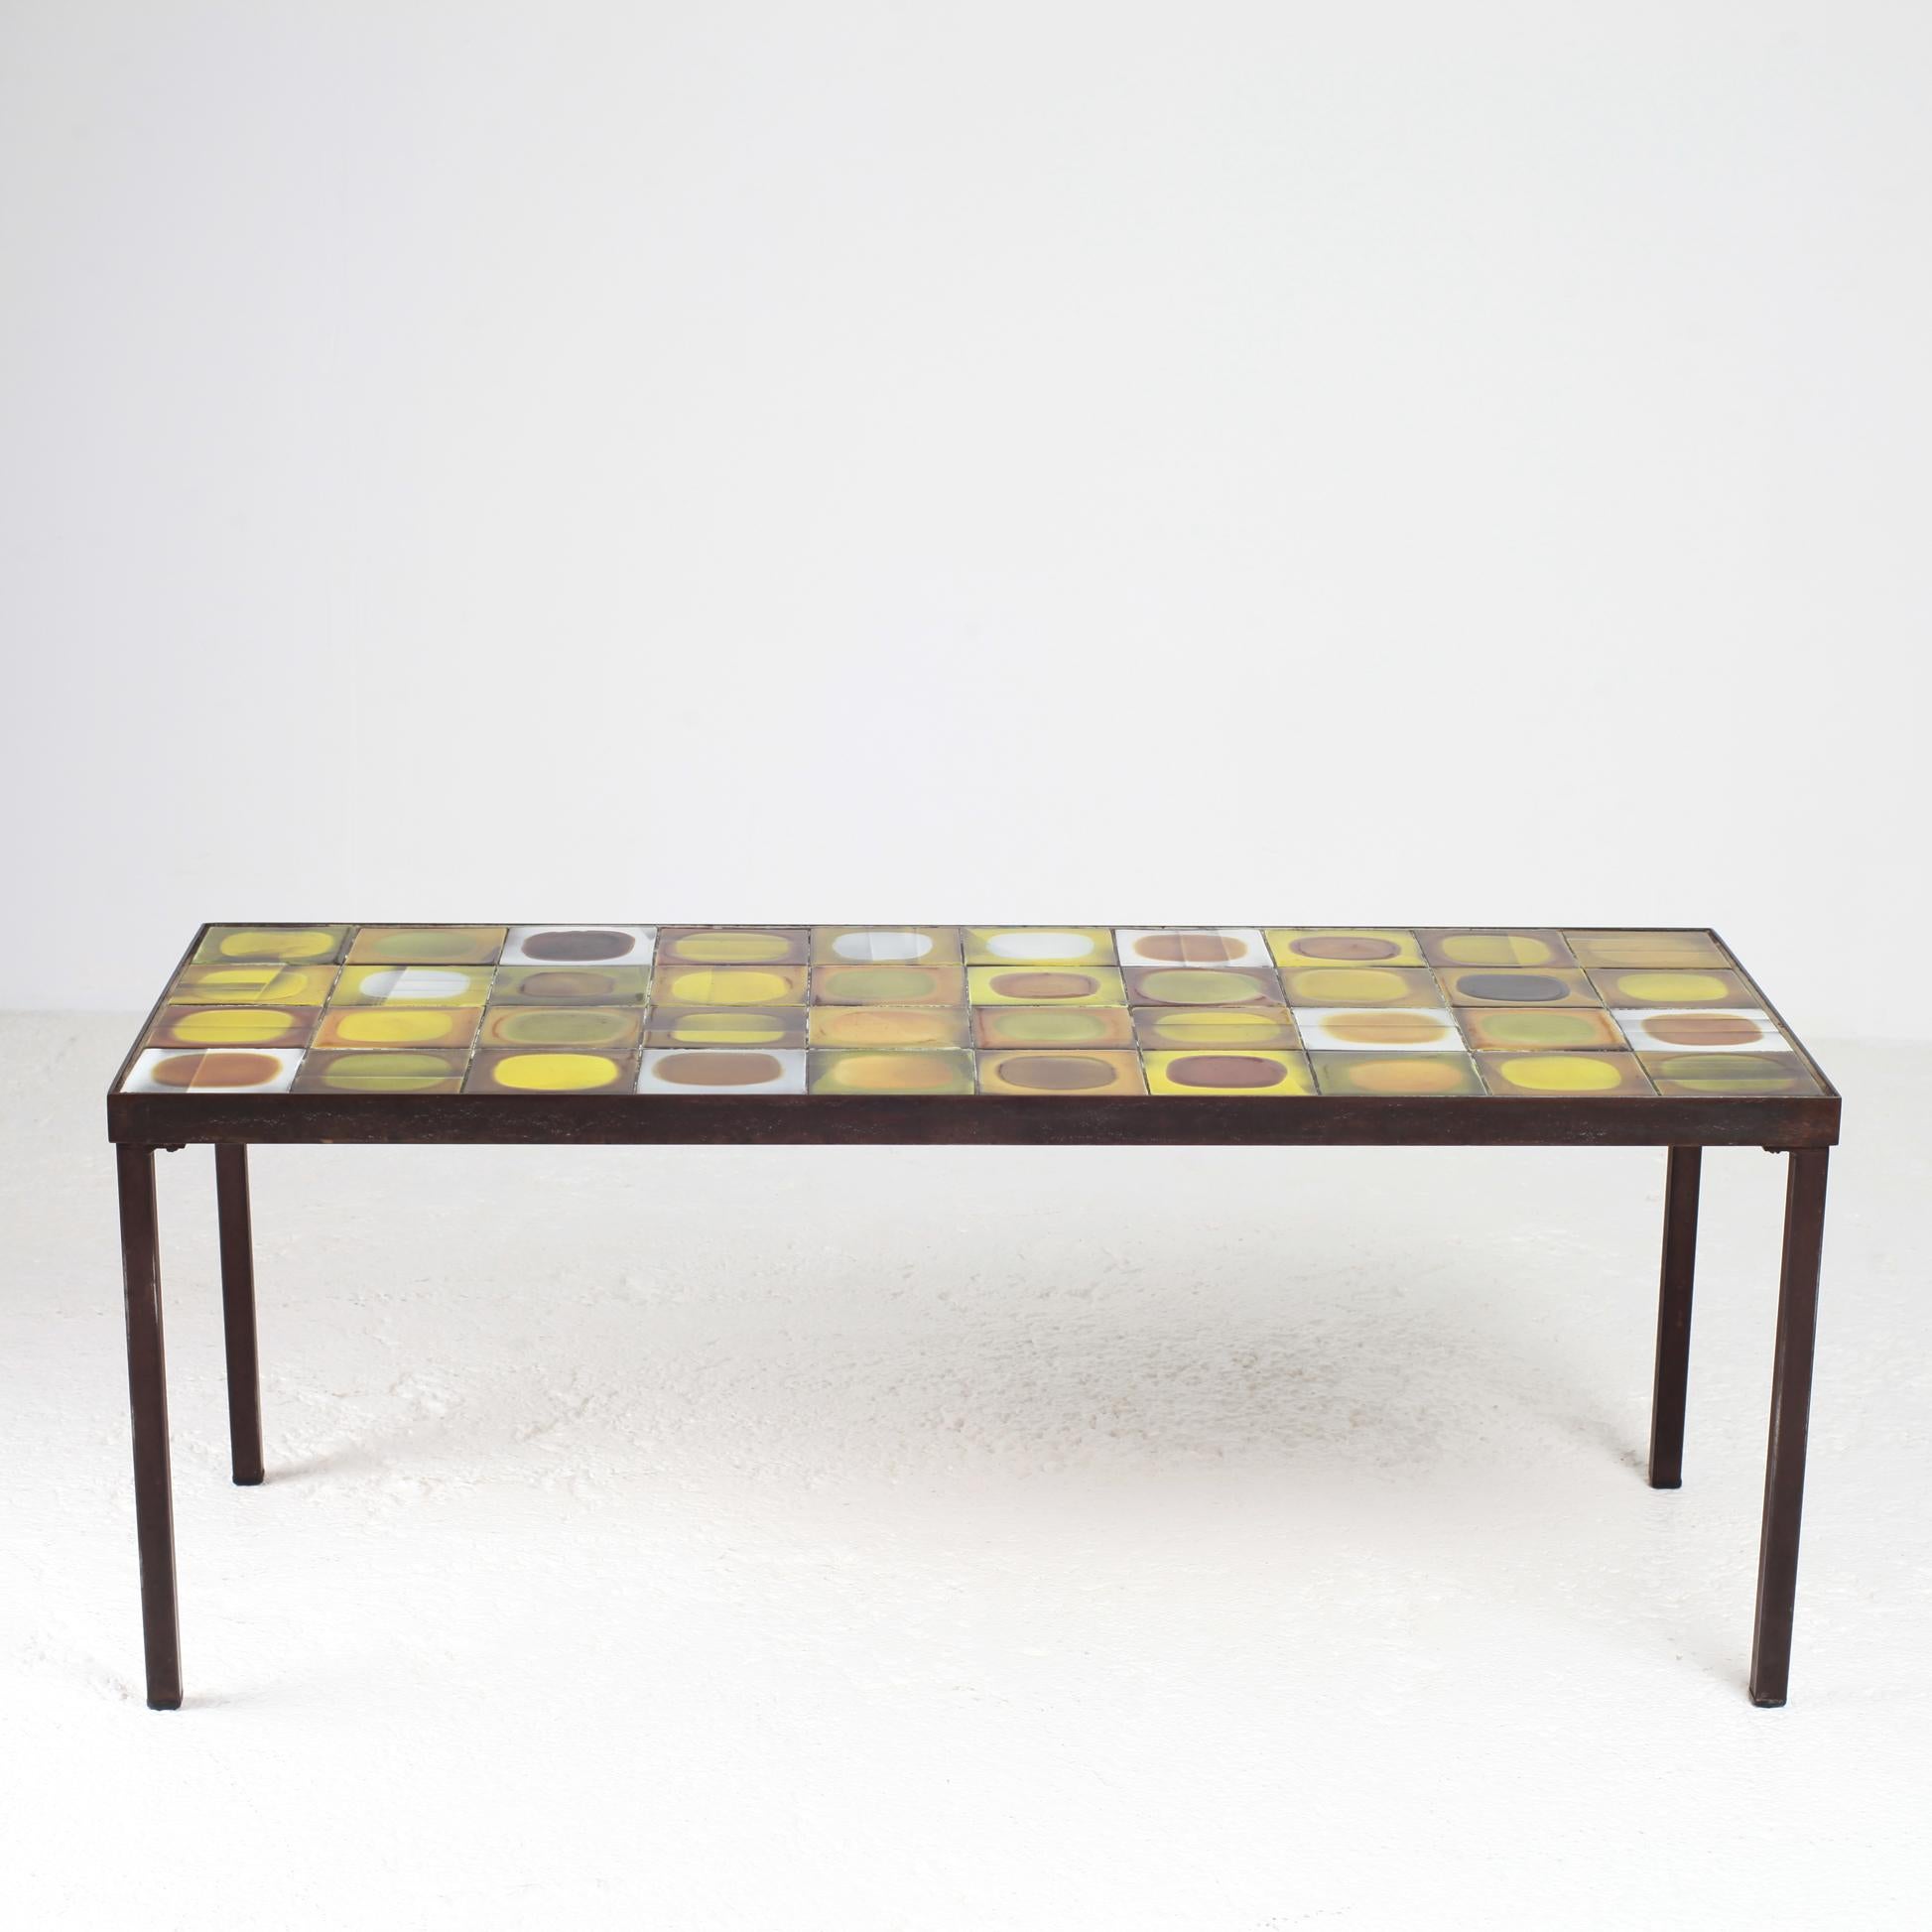 Roger Capron ceramic planete coffee Table.
Enameled ceramic tiles.
black metal Frame.
signed.
Vallauris France, circa 1960.